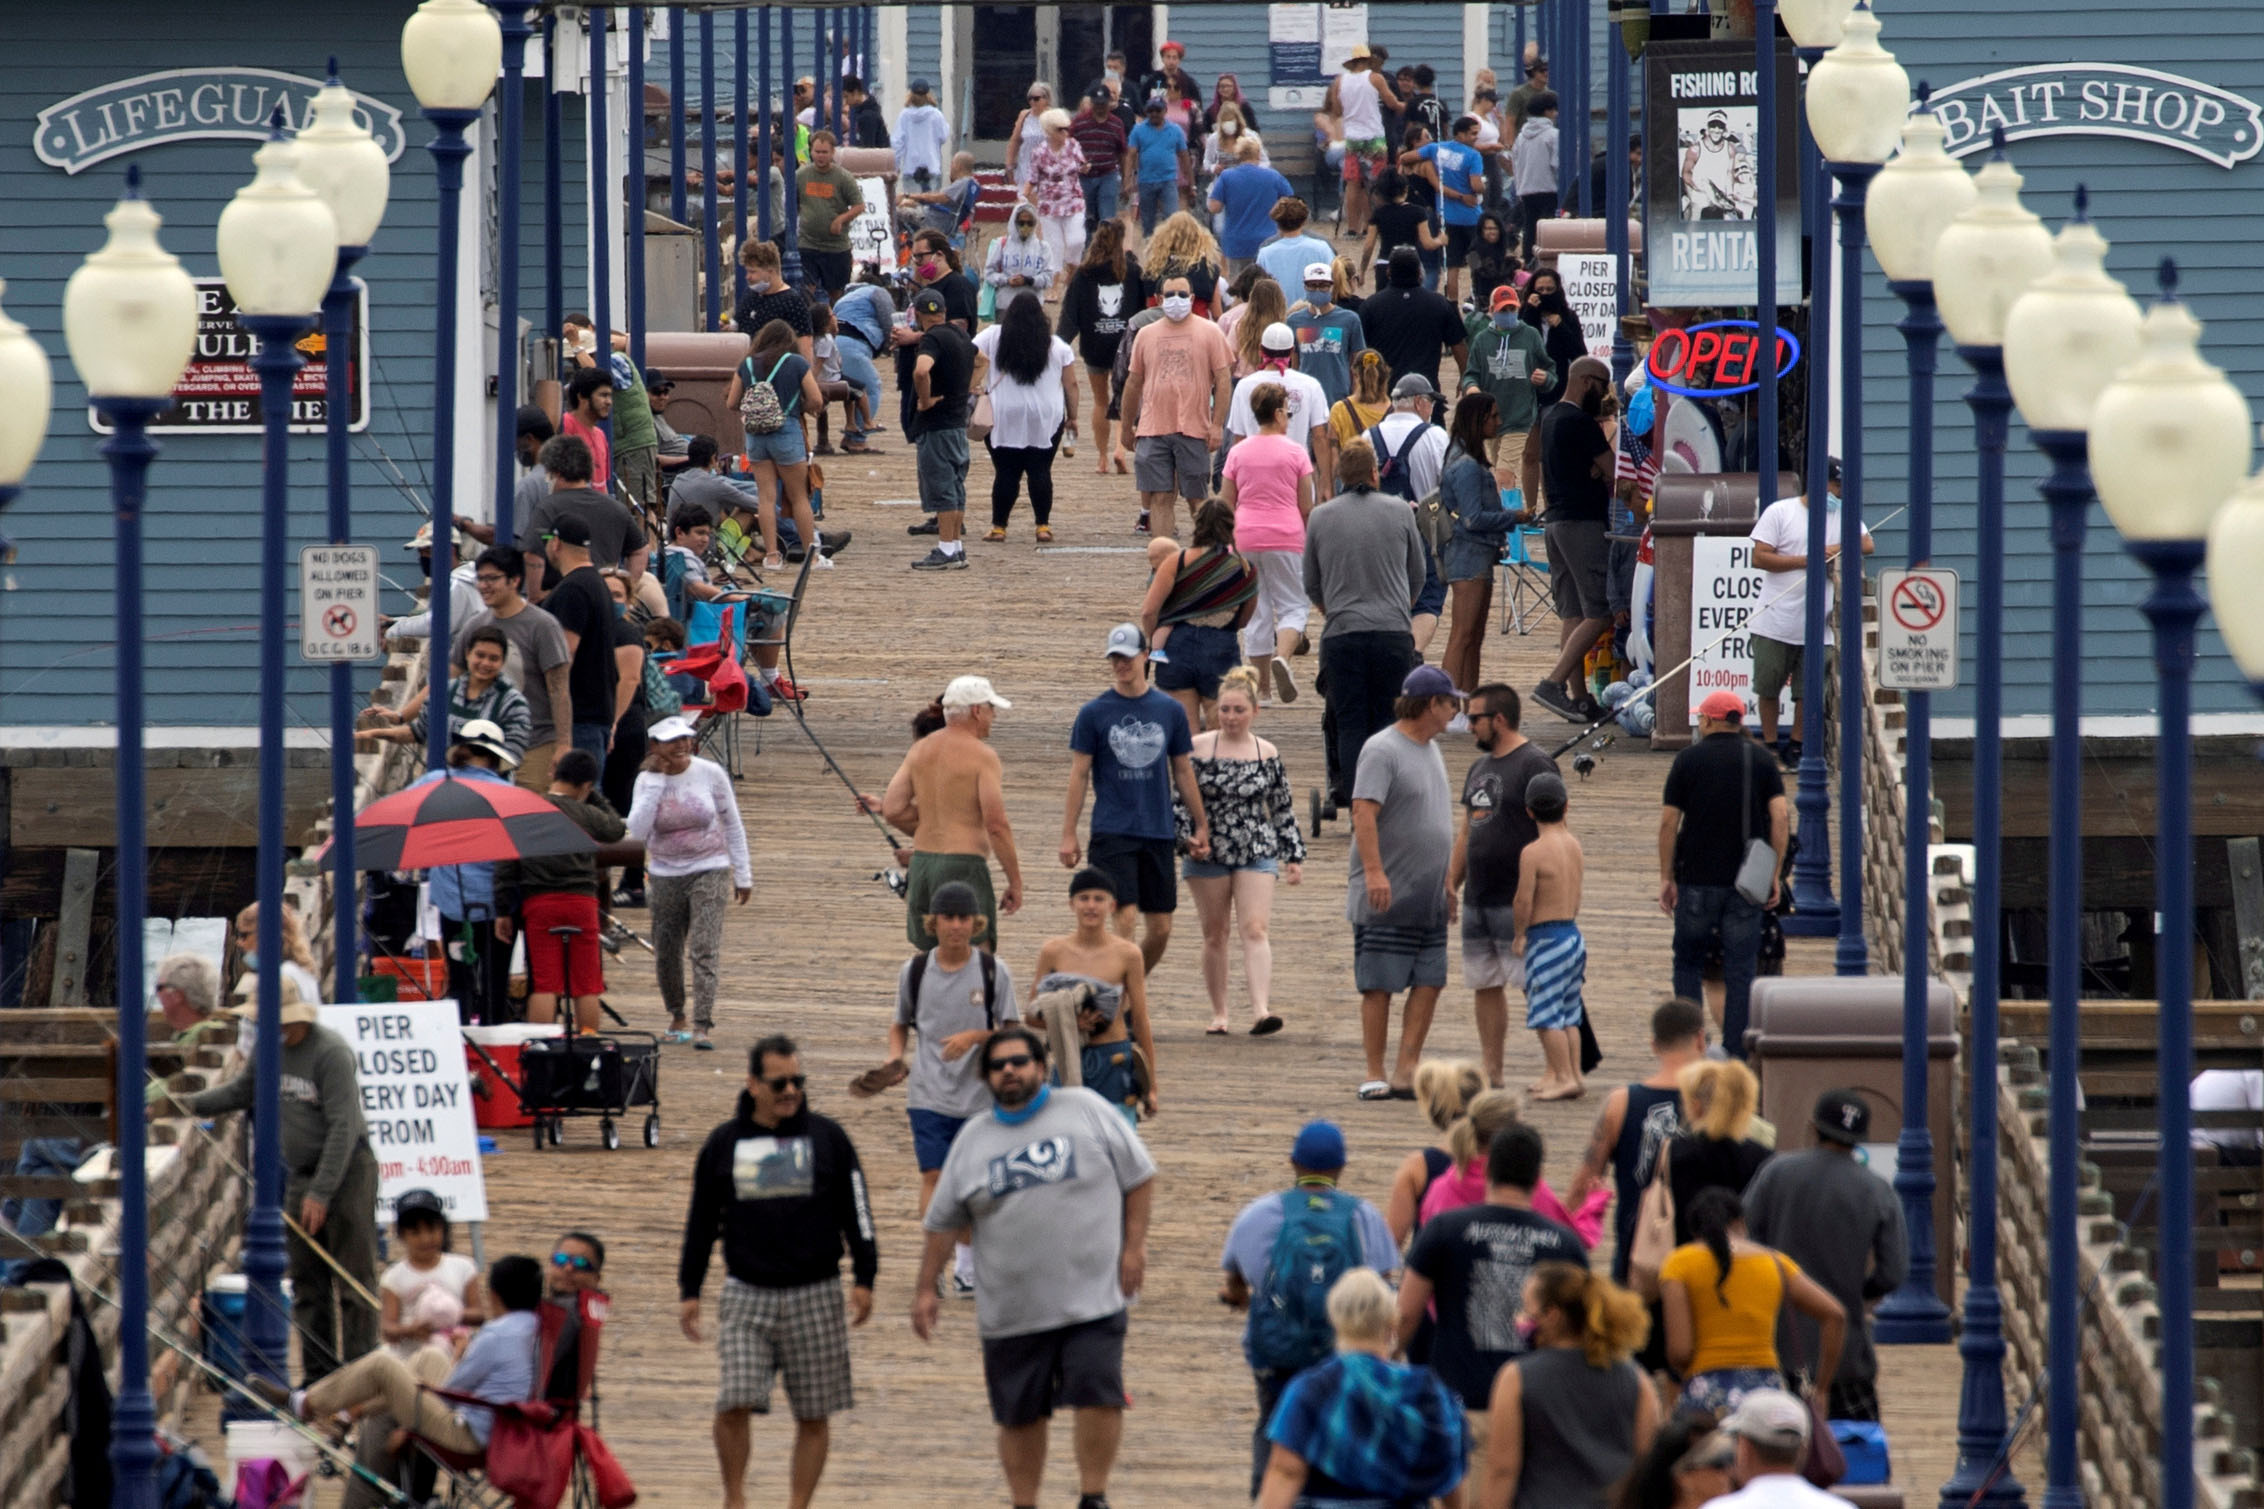 PHOTO: Few people wear masks as they walk on the beach pier in Oceanside, Calif., June 22, 2020.